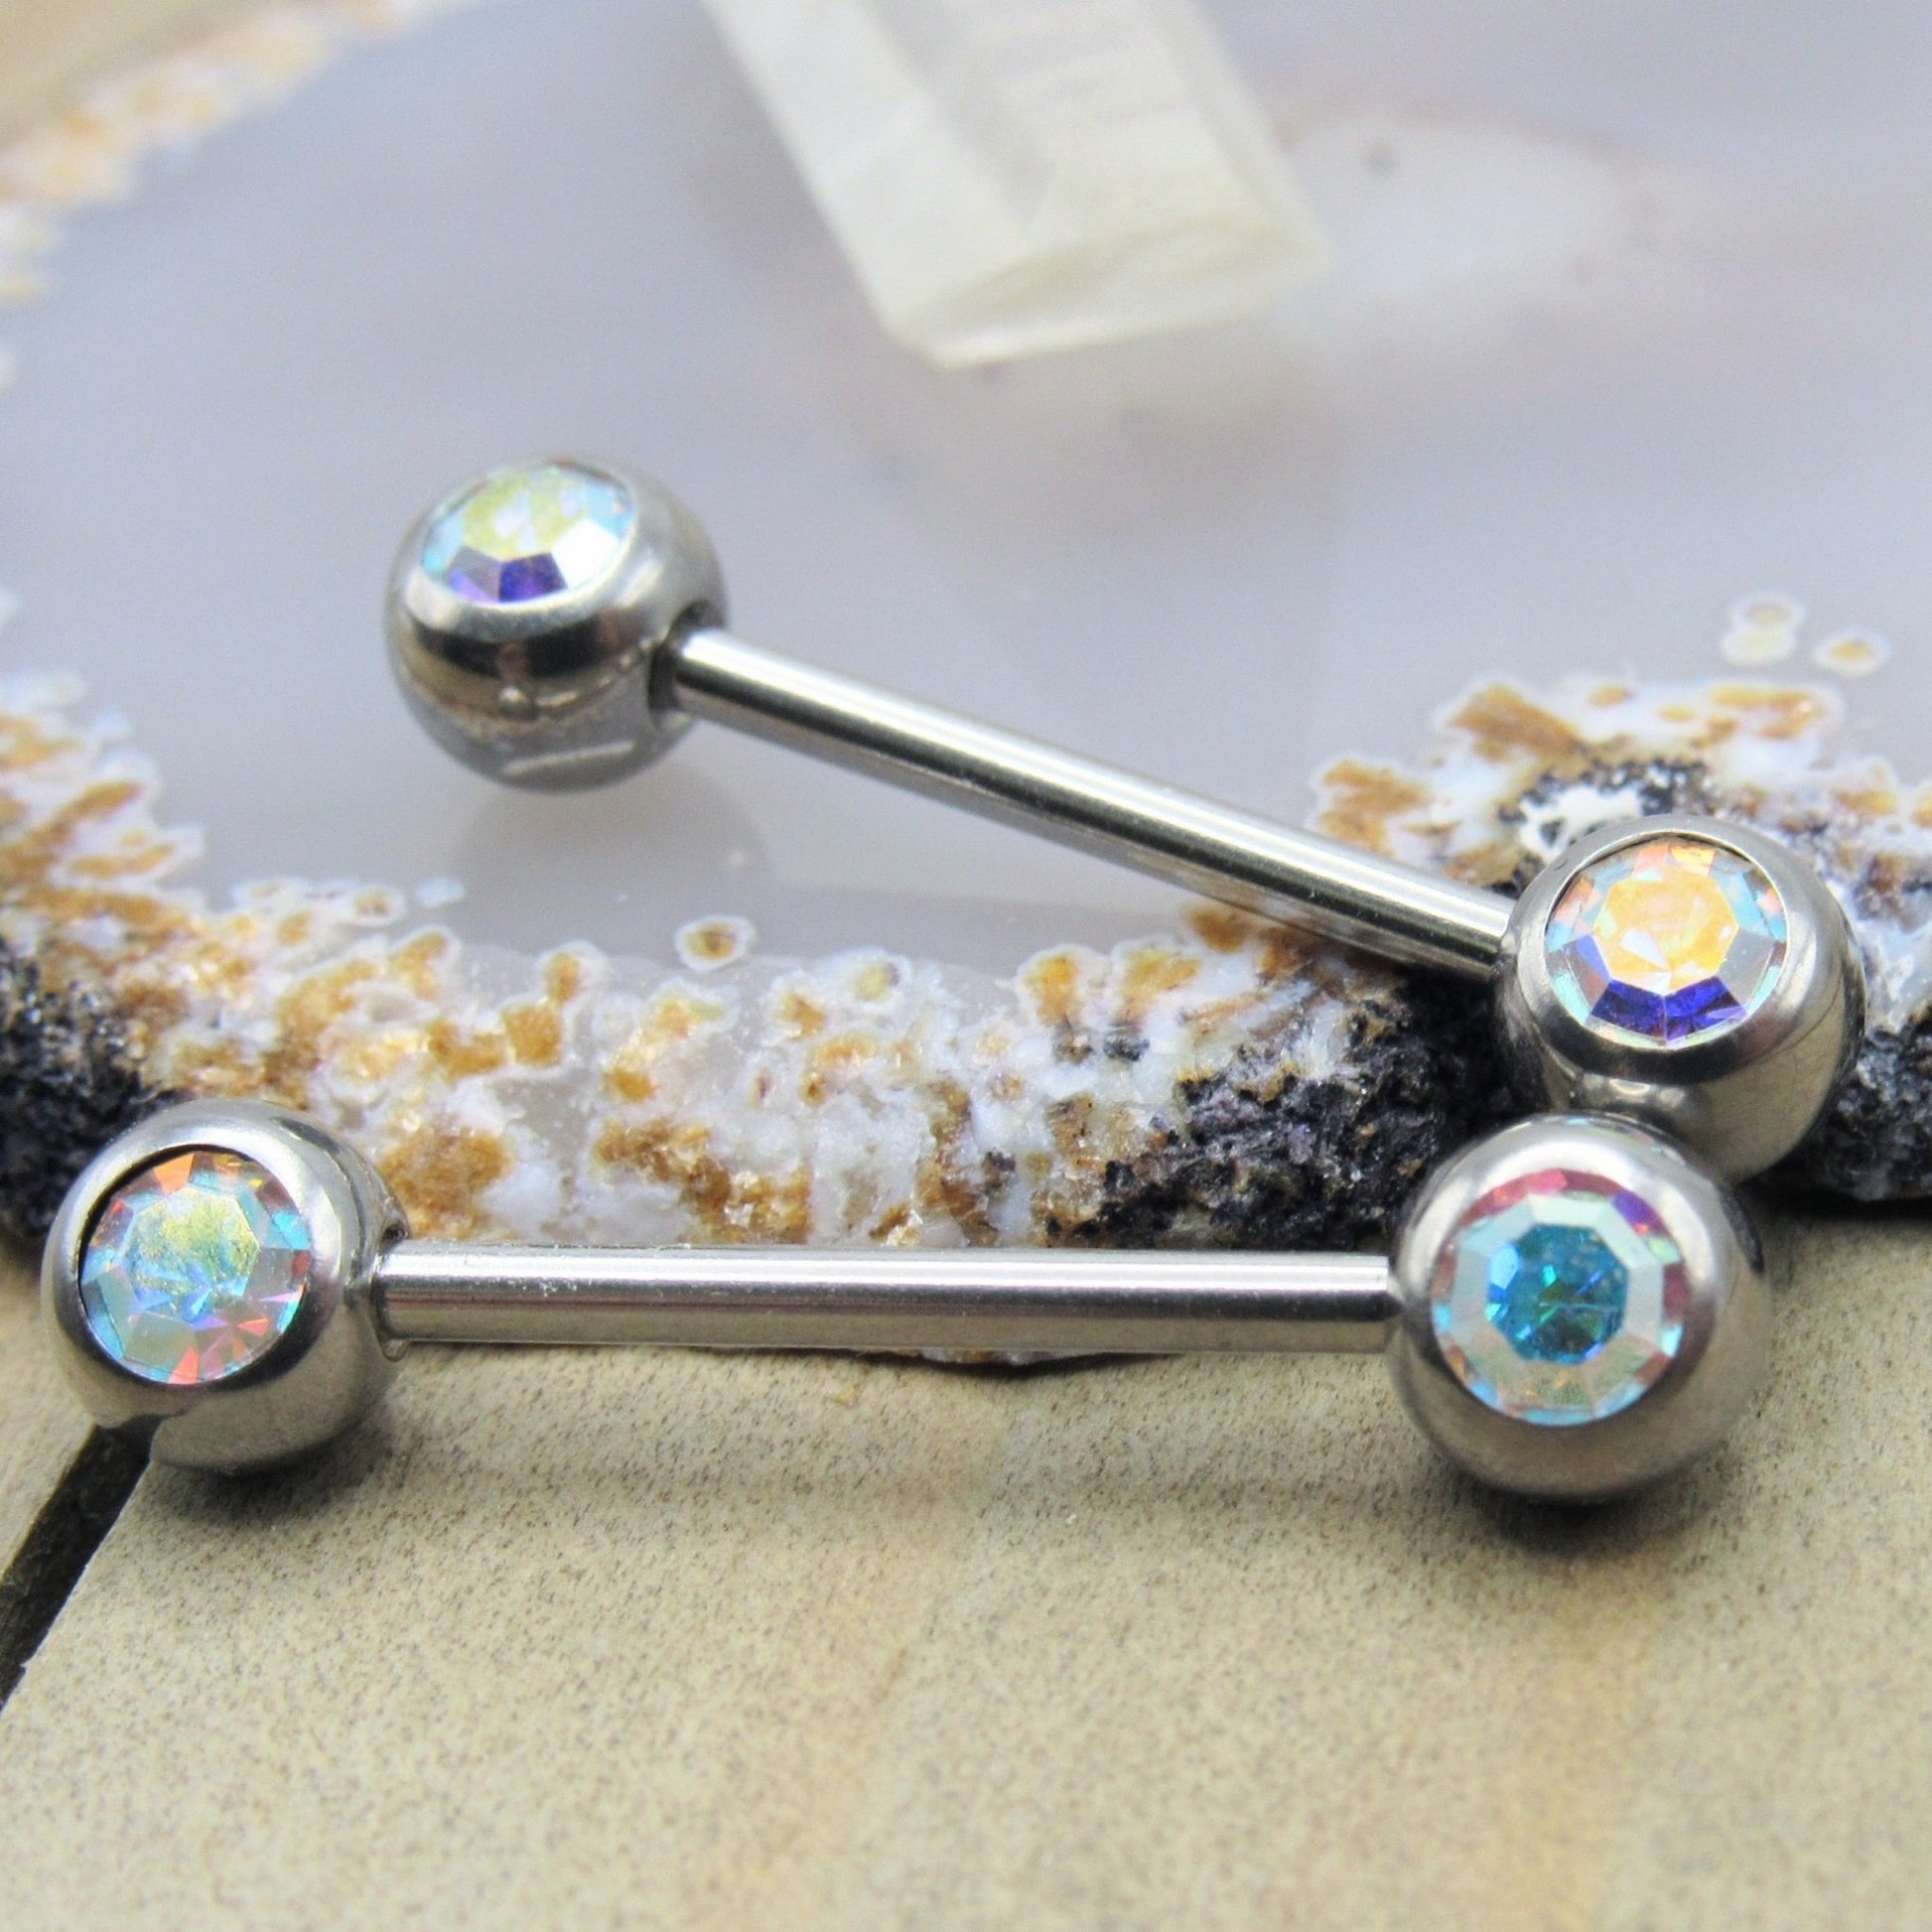 Silver nipple piercing jewelry set 14g 5/8" double ab gemstone forward facing gem pair 316L stainless steel - Siren Body Jewelry